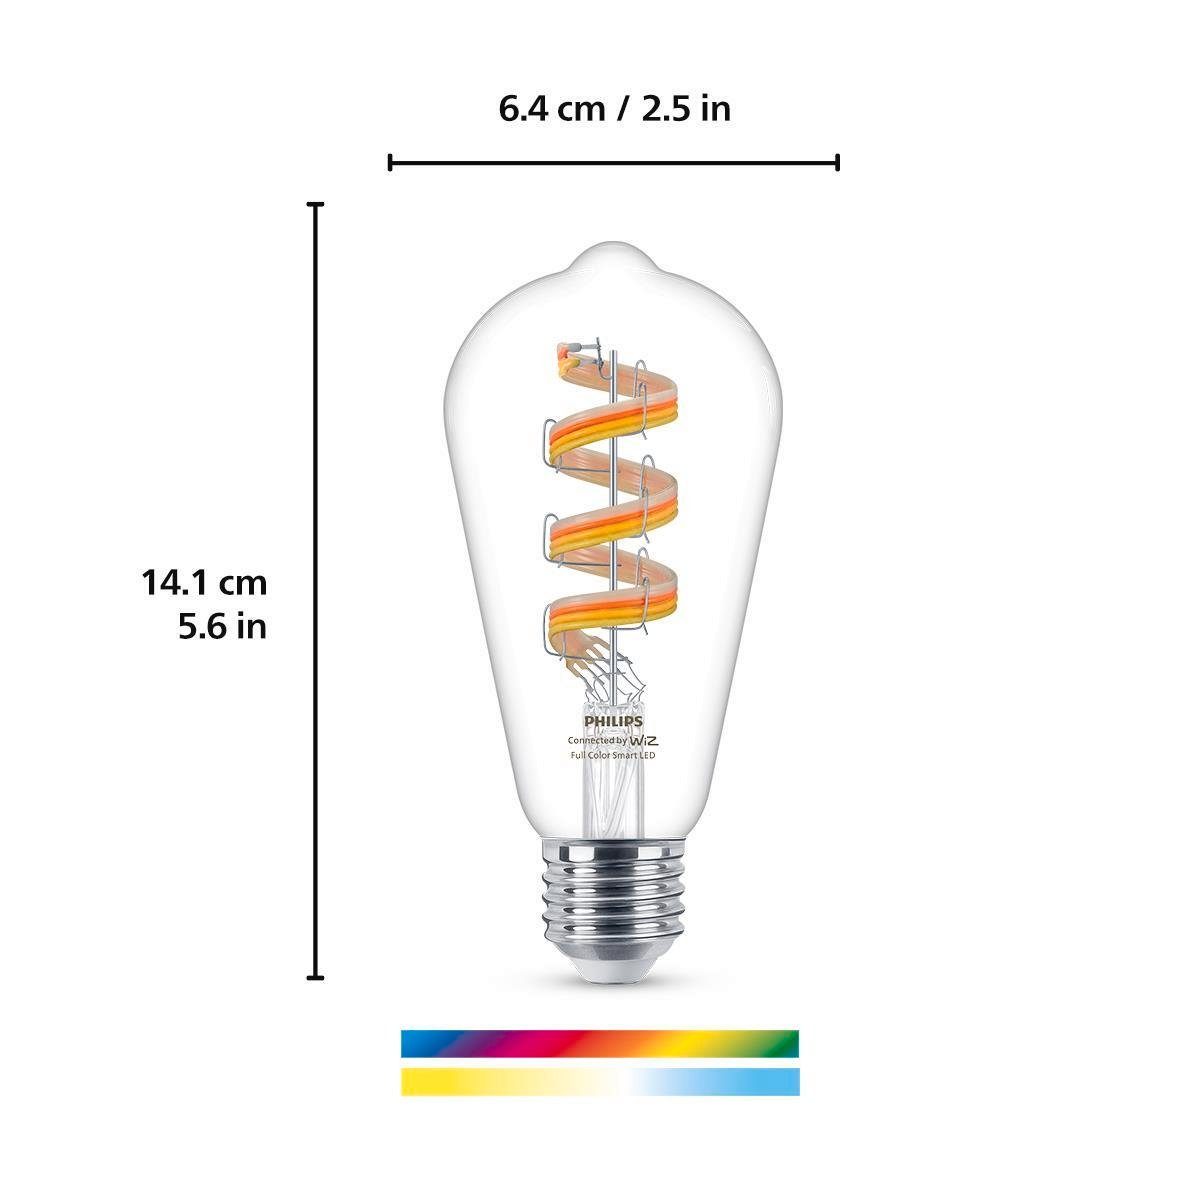 WiZ Smarte LED fest LED-Leuchte LED-Lampe, integriert